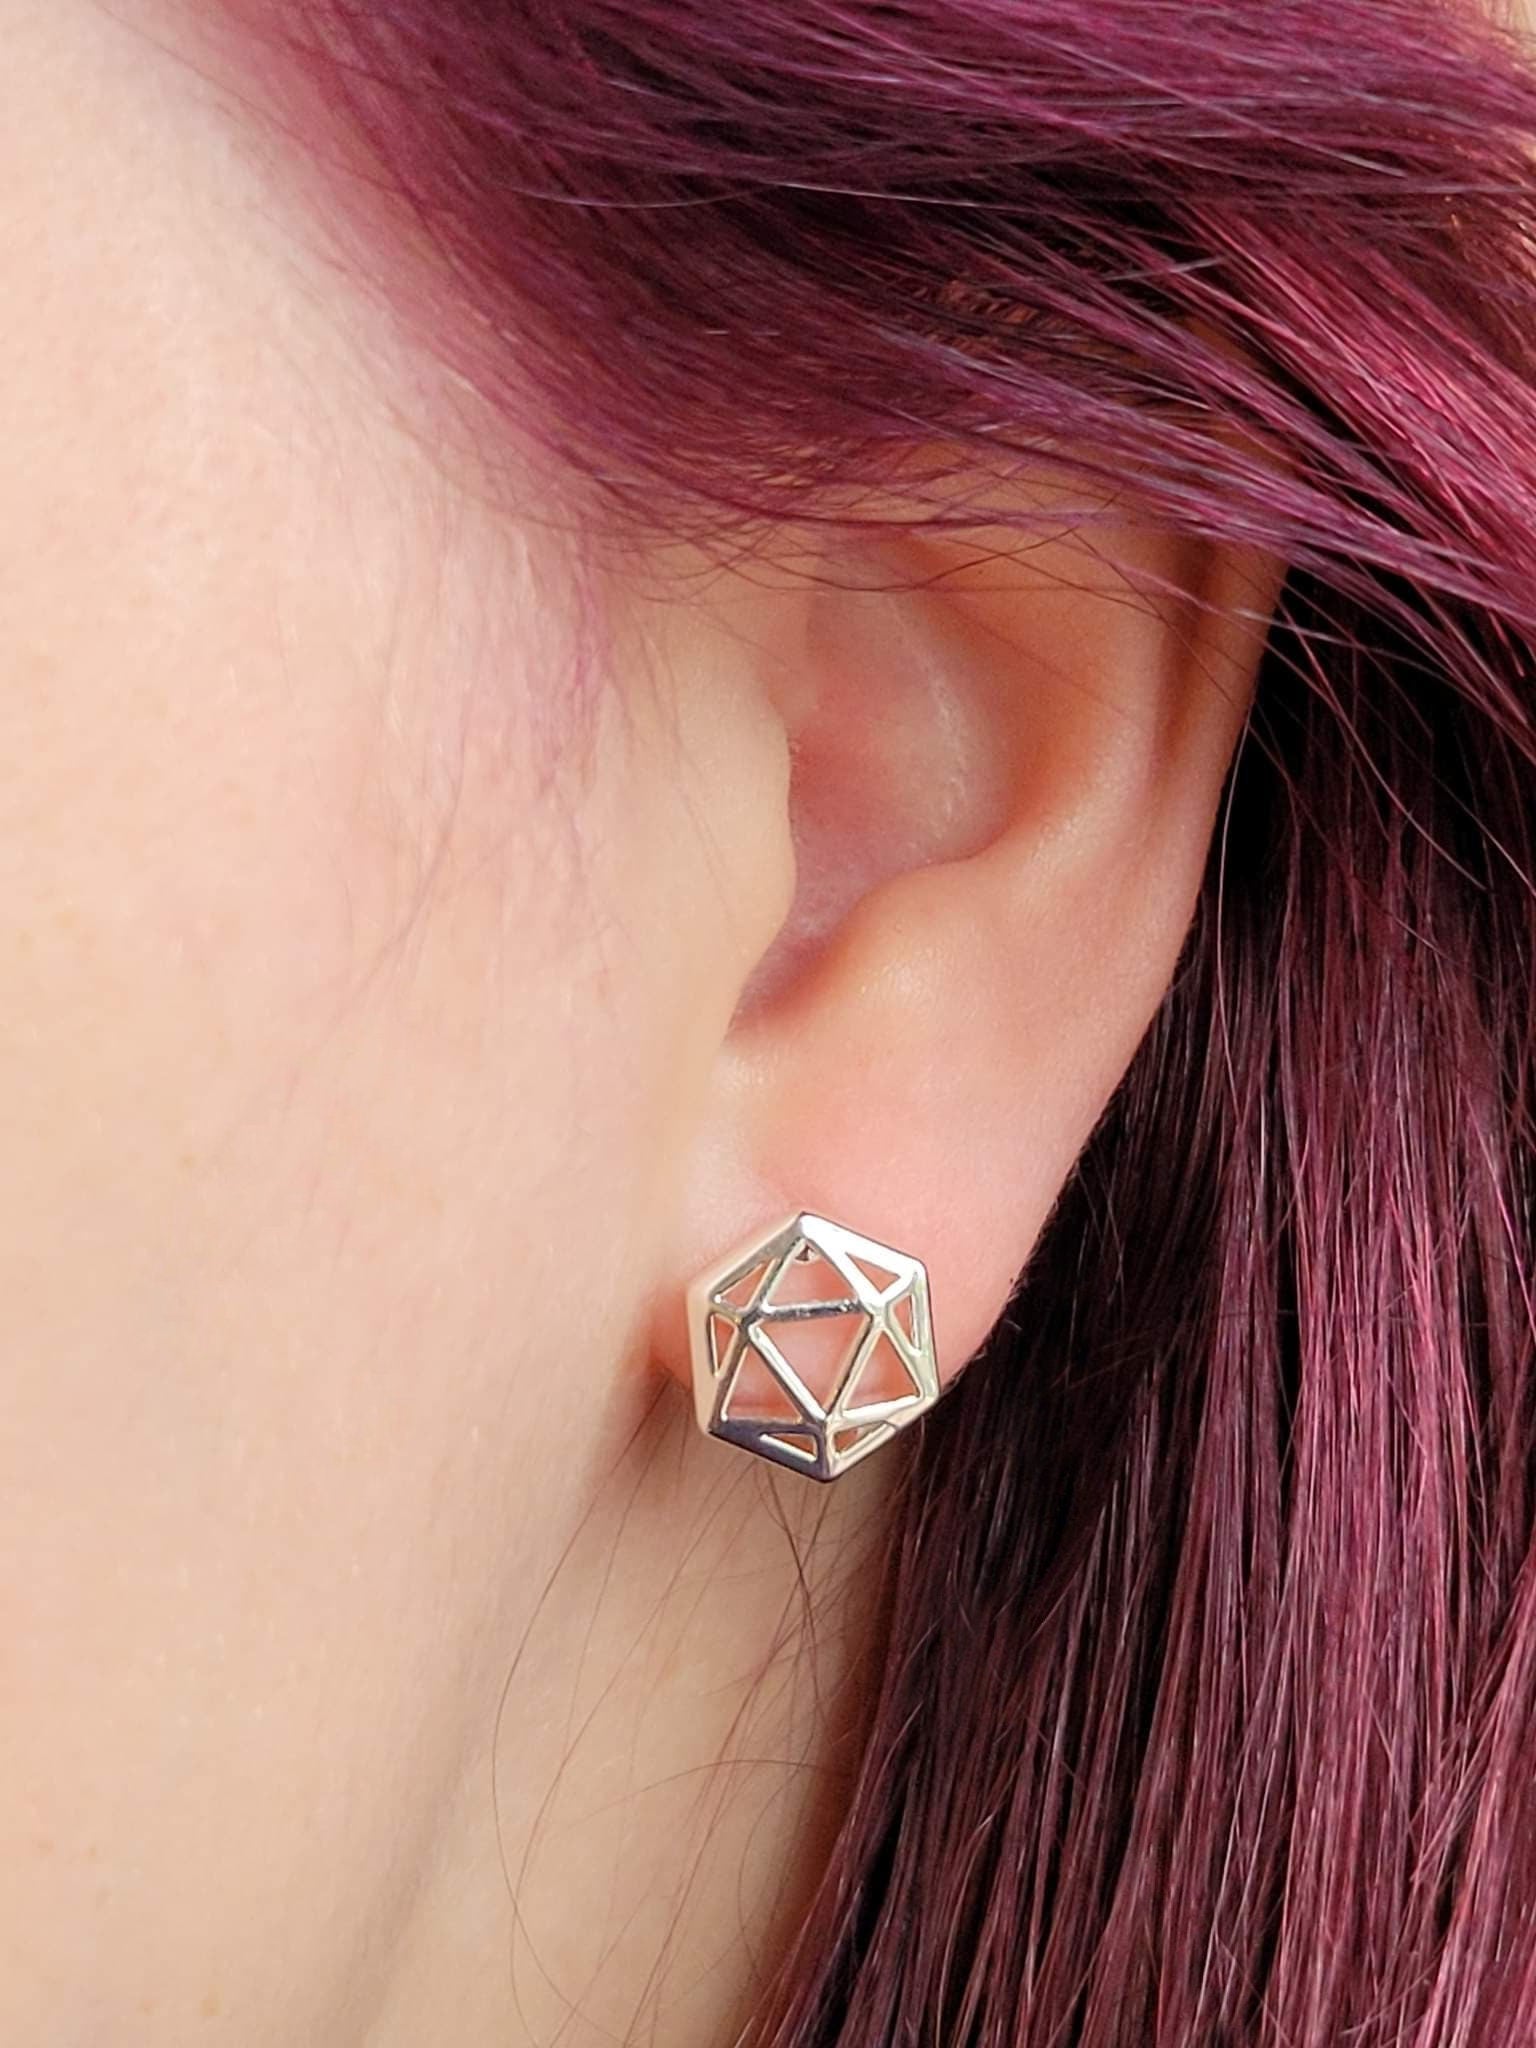 D20 Dice stud earrings, Dice earrings with pink opal